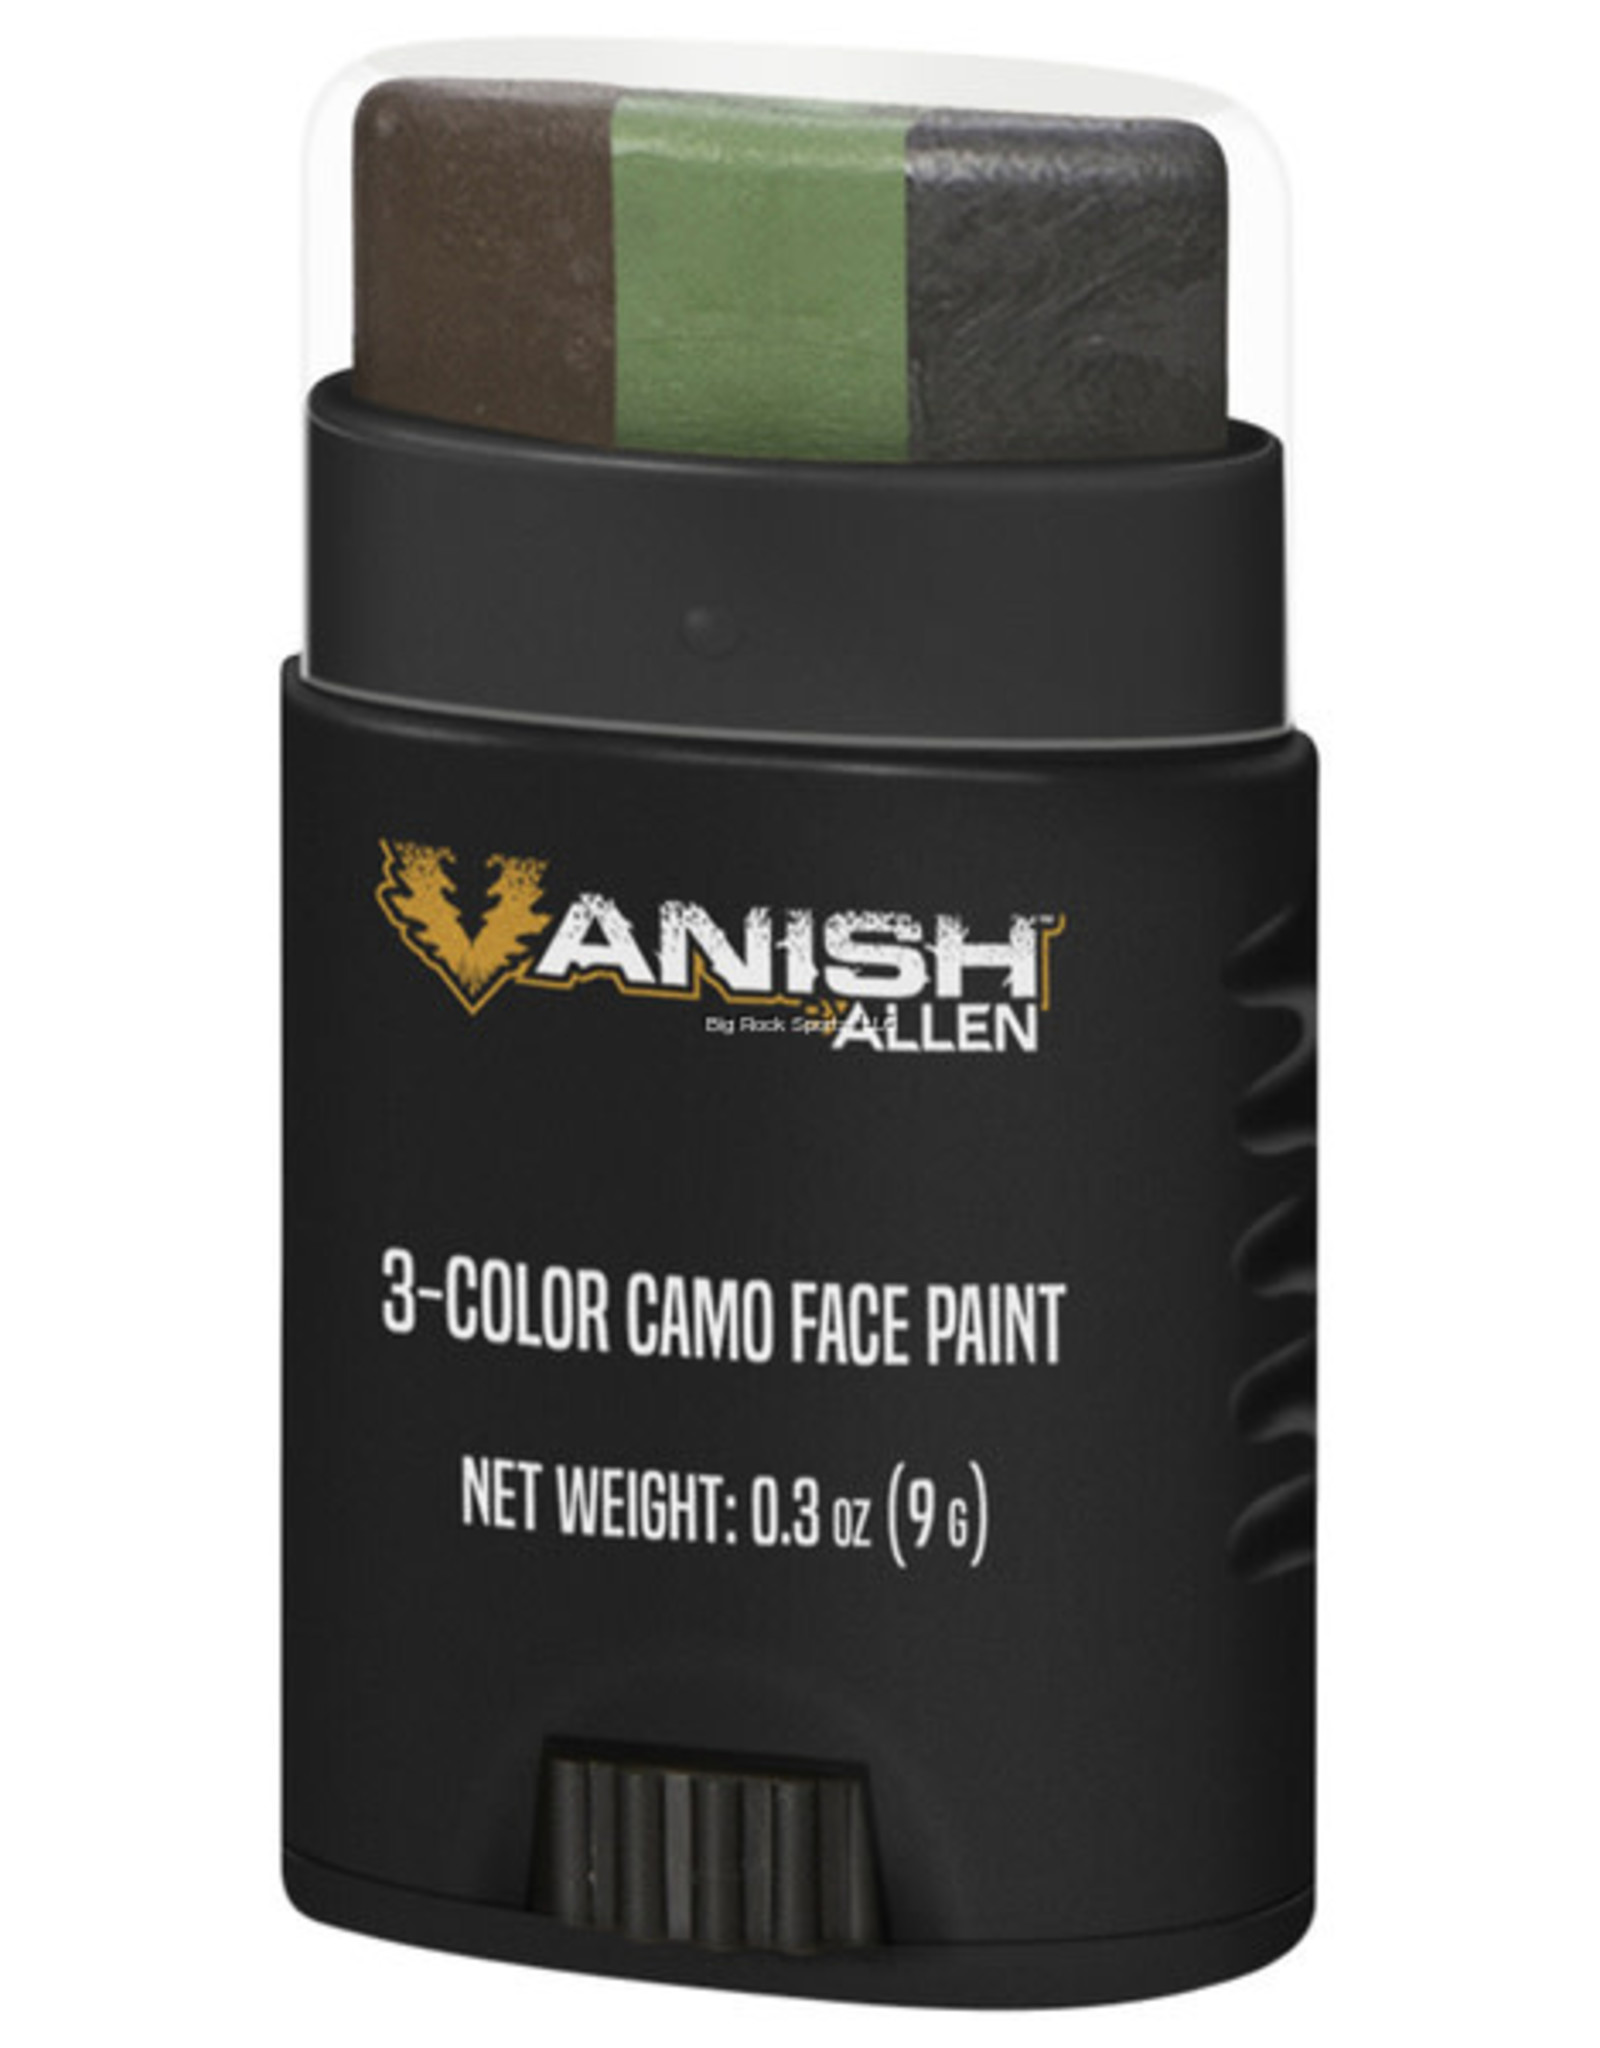 Allen Allen 6117 Vanish Camo Face Paint Stick